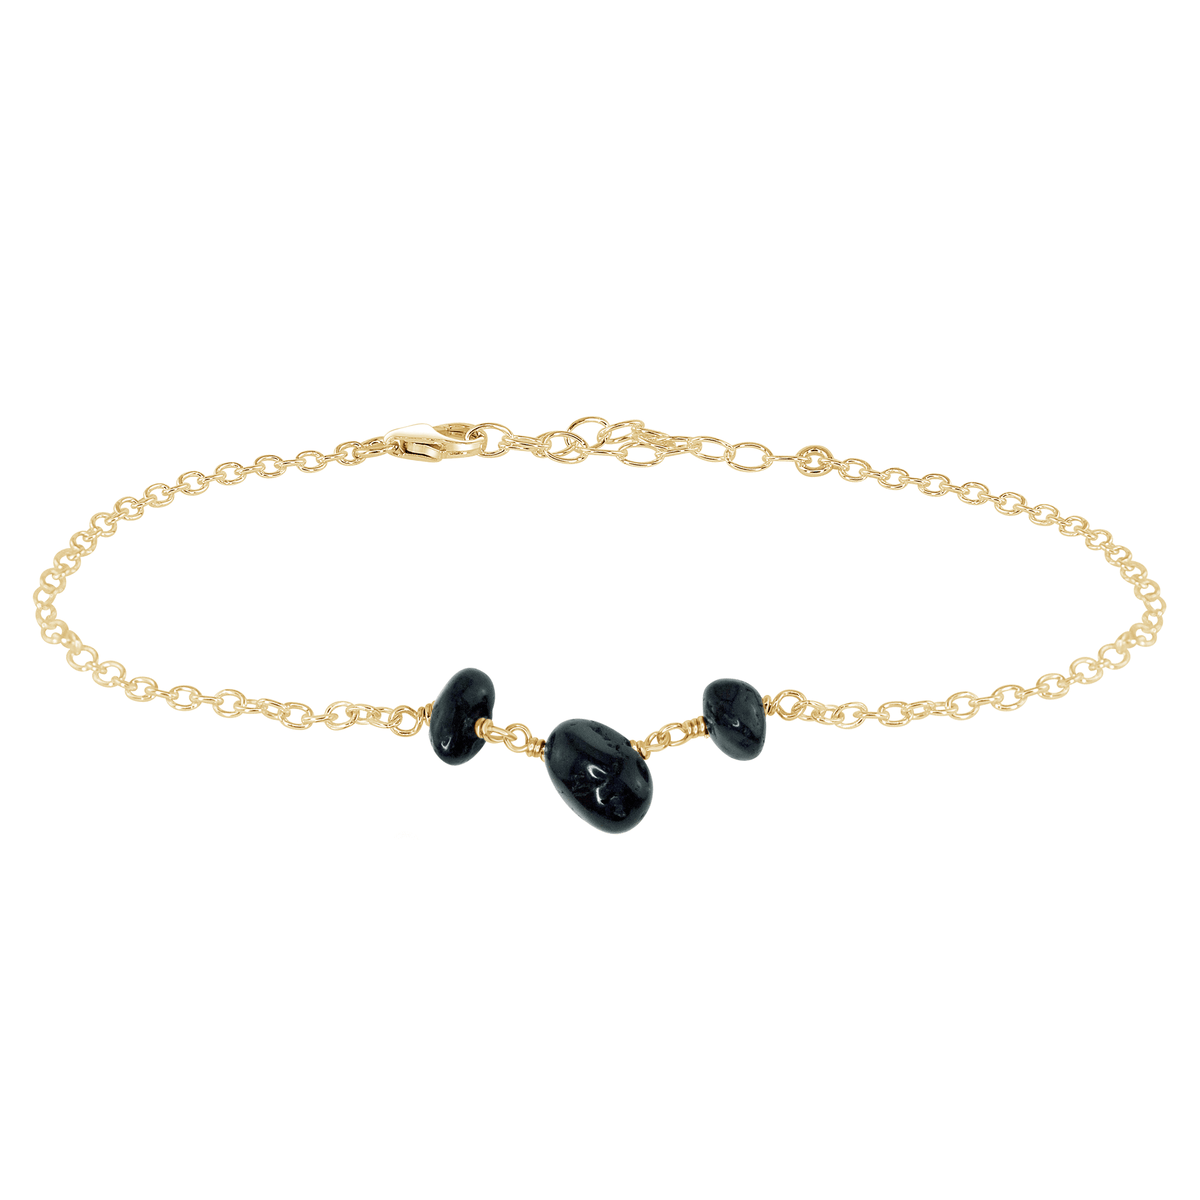 Beaded Chain Anklet - Black Tourmaline - 14K Gold Fill - Luna Tide Handmade Jewellery